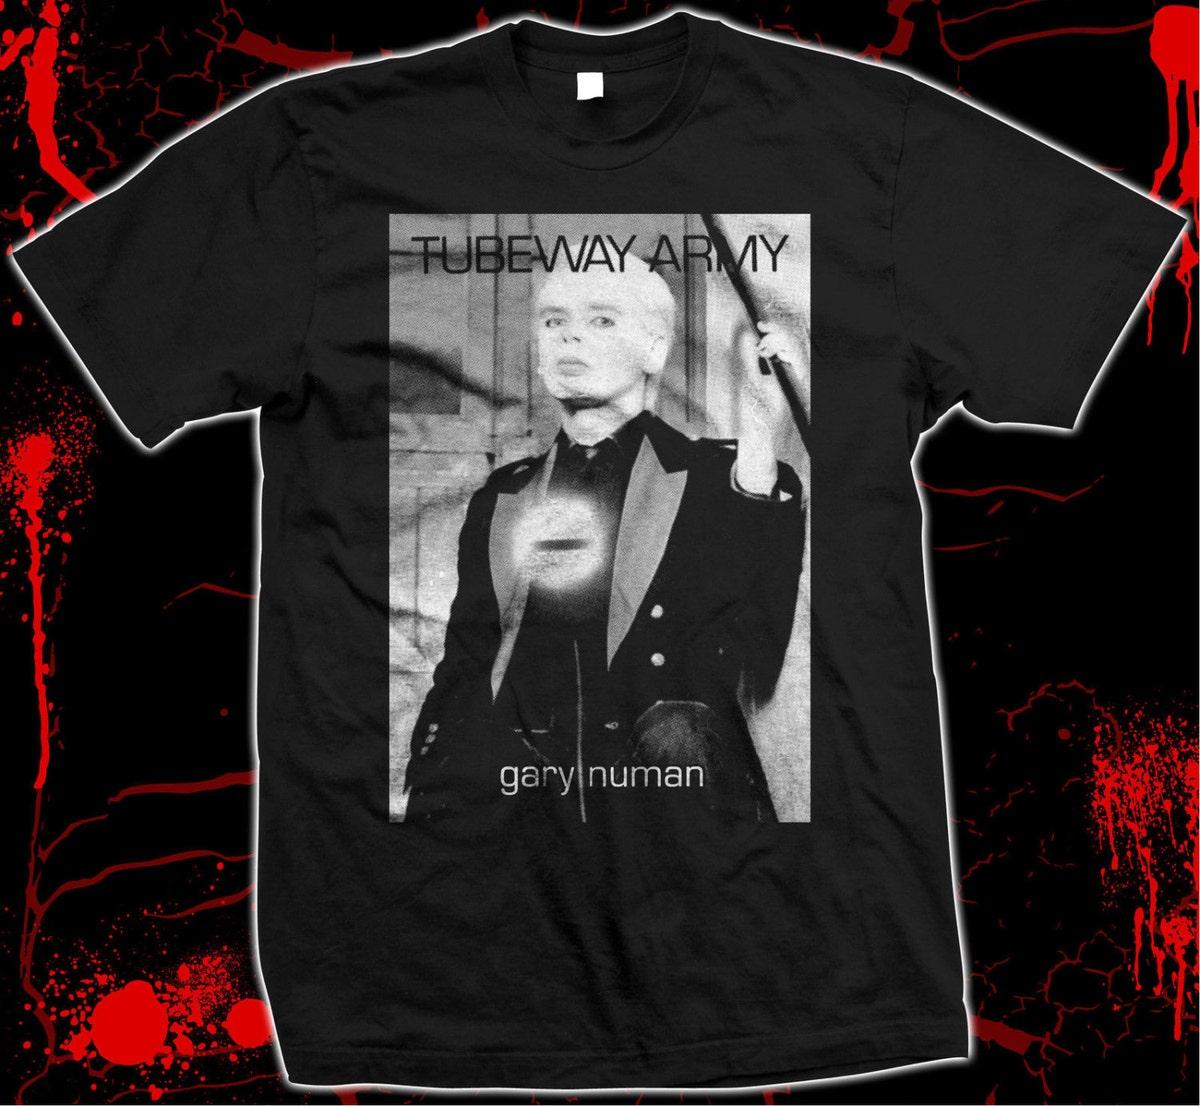 Tubeway Army Member Gary Numan Unisex T-shirt Gift For Music Fans